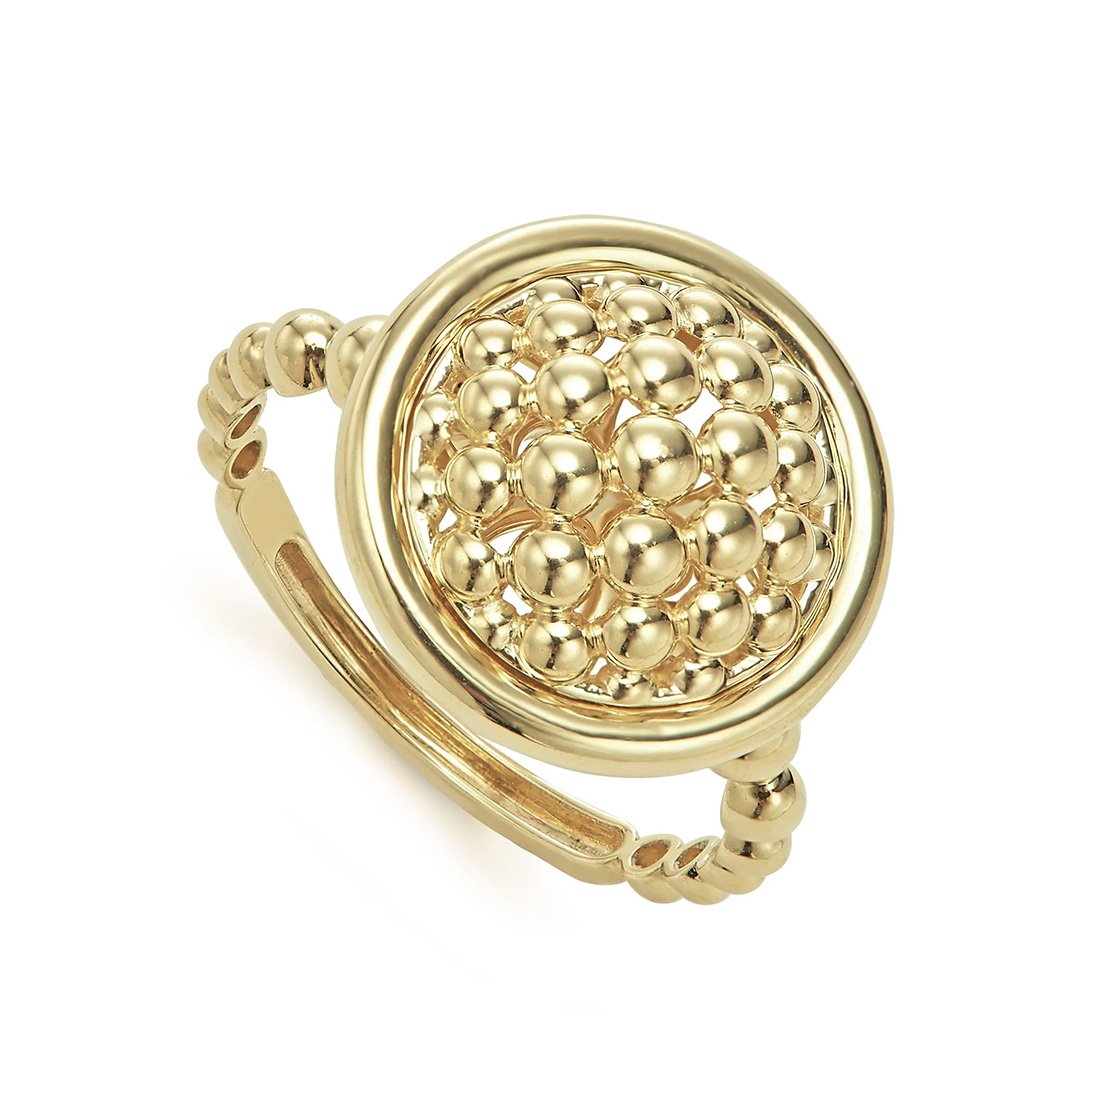 LAGOS "Meridian" 18kt Yellow Gold Caviar Ring, Size 7